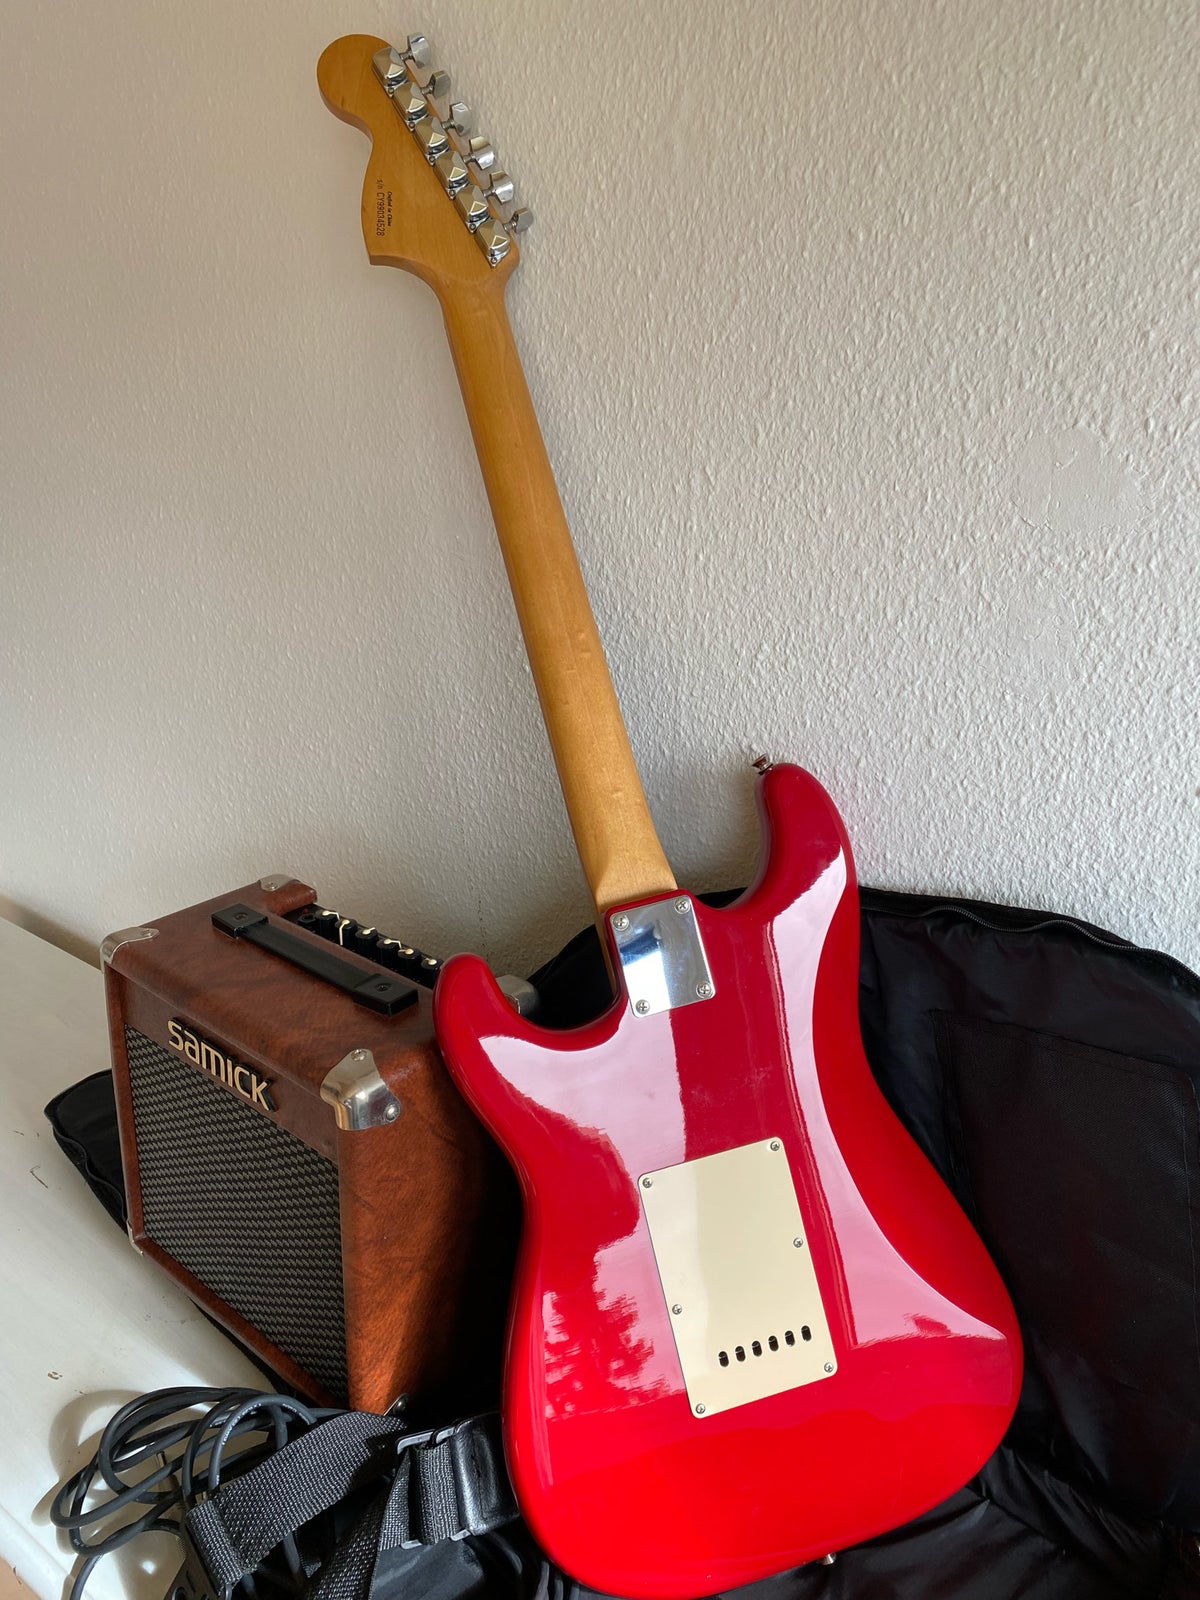 Elguitar, Squier Stratocaster affinity